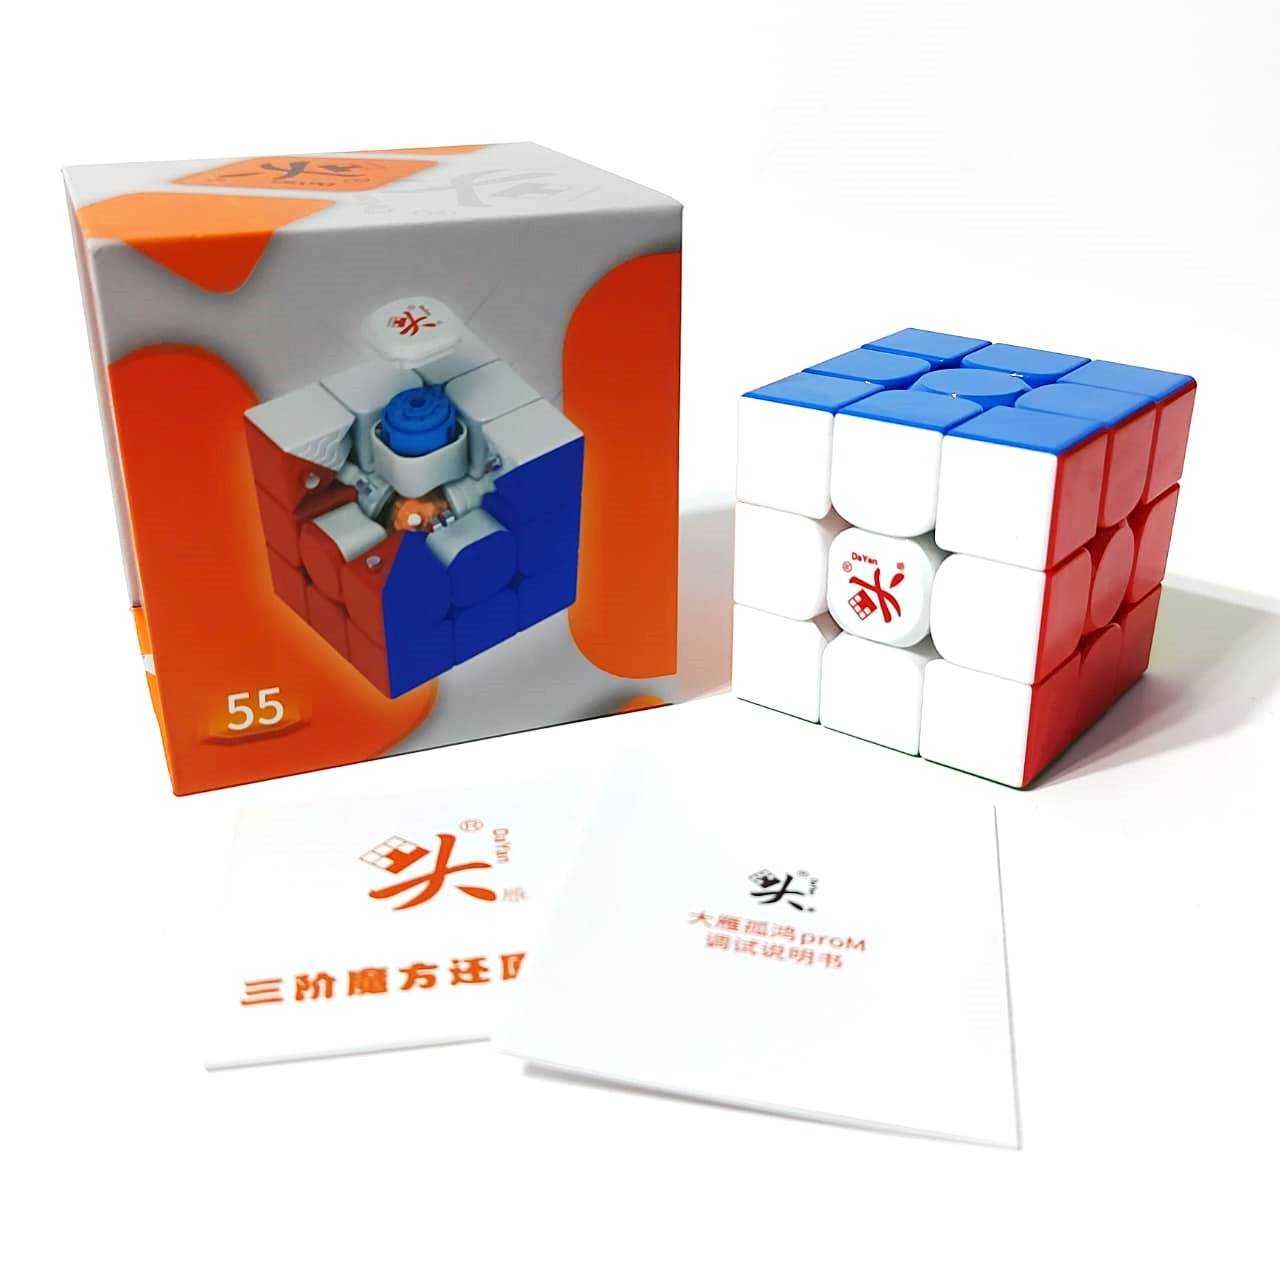 Кубик Магнитный DaYan GuHong M Pro 55 mm (Maglev) 3x3 51723